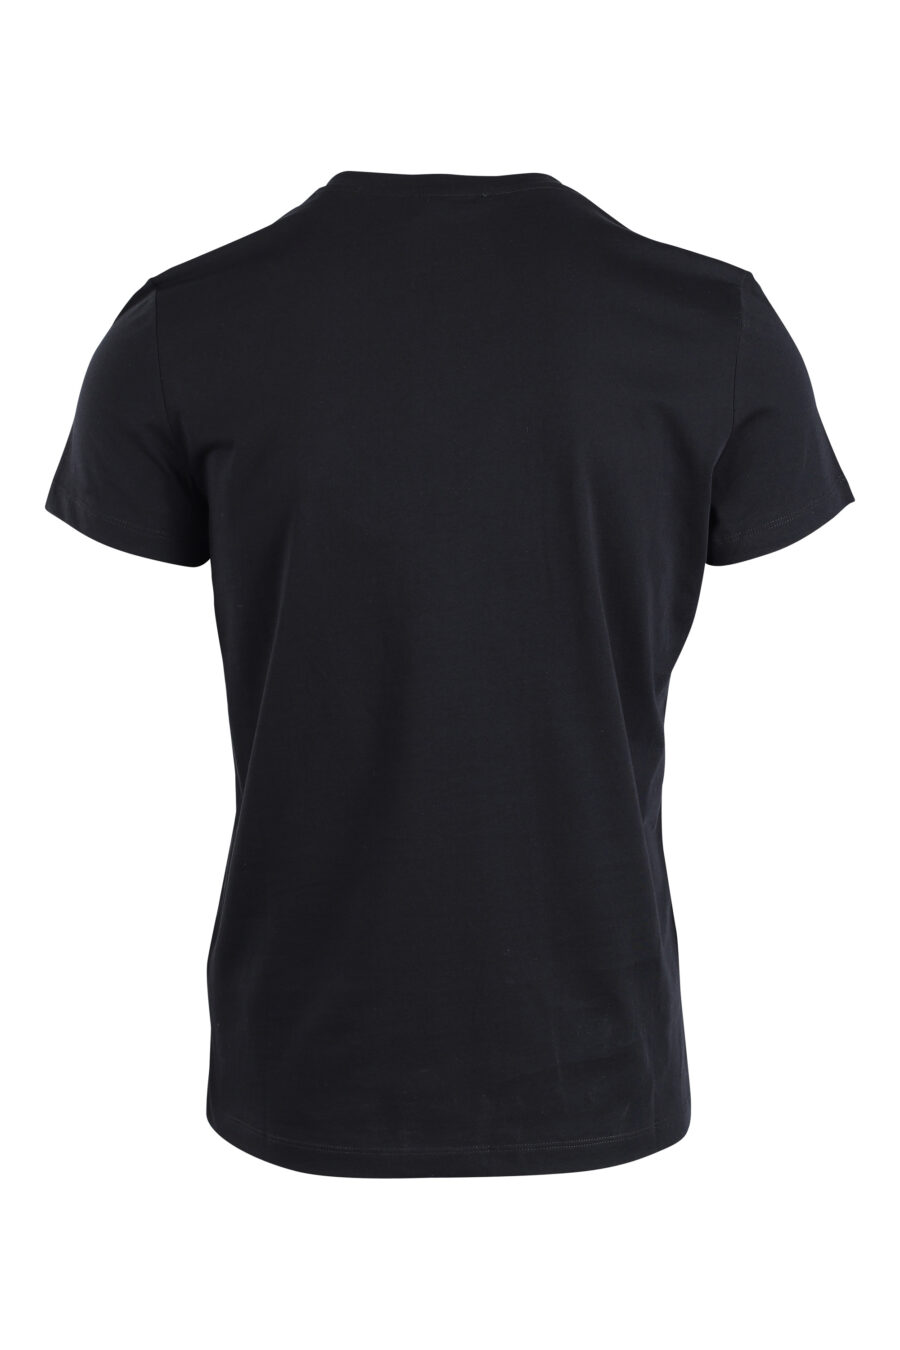 Camiseta negra con maxilogo plateado "paris" - IMG 2590